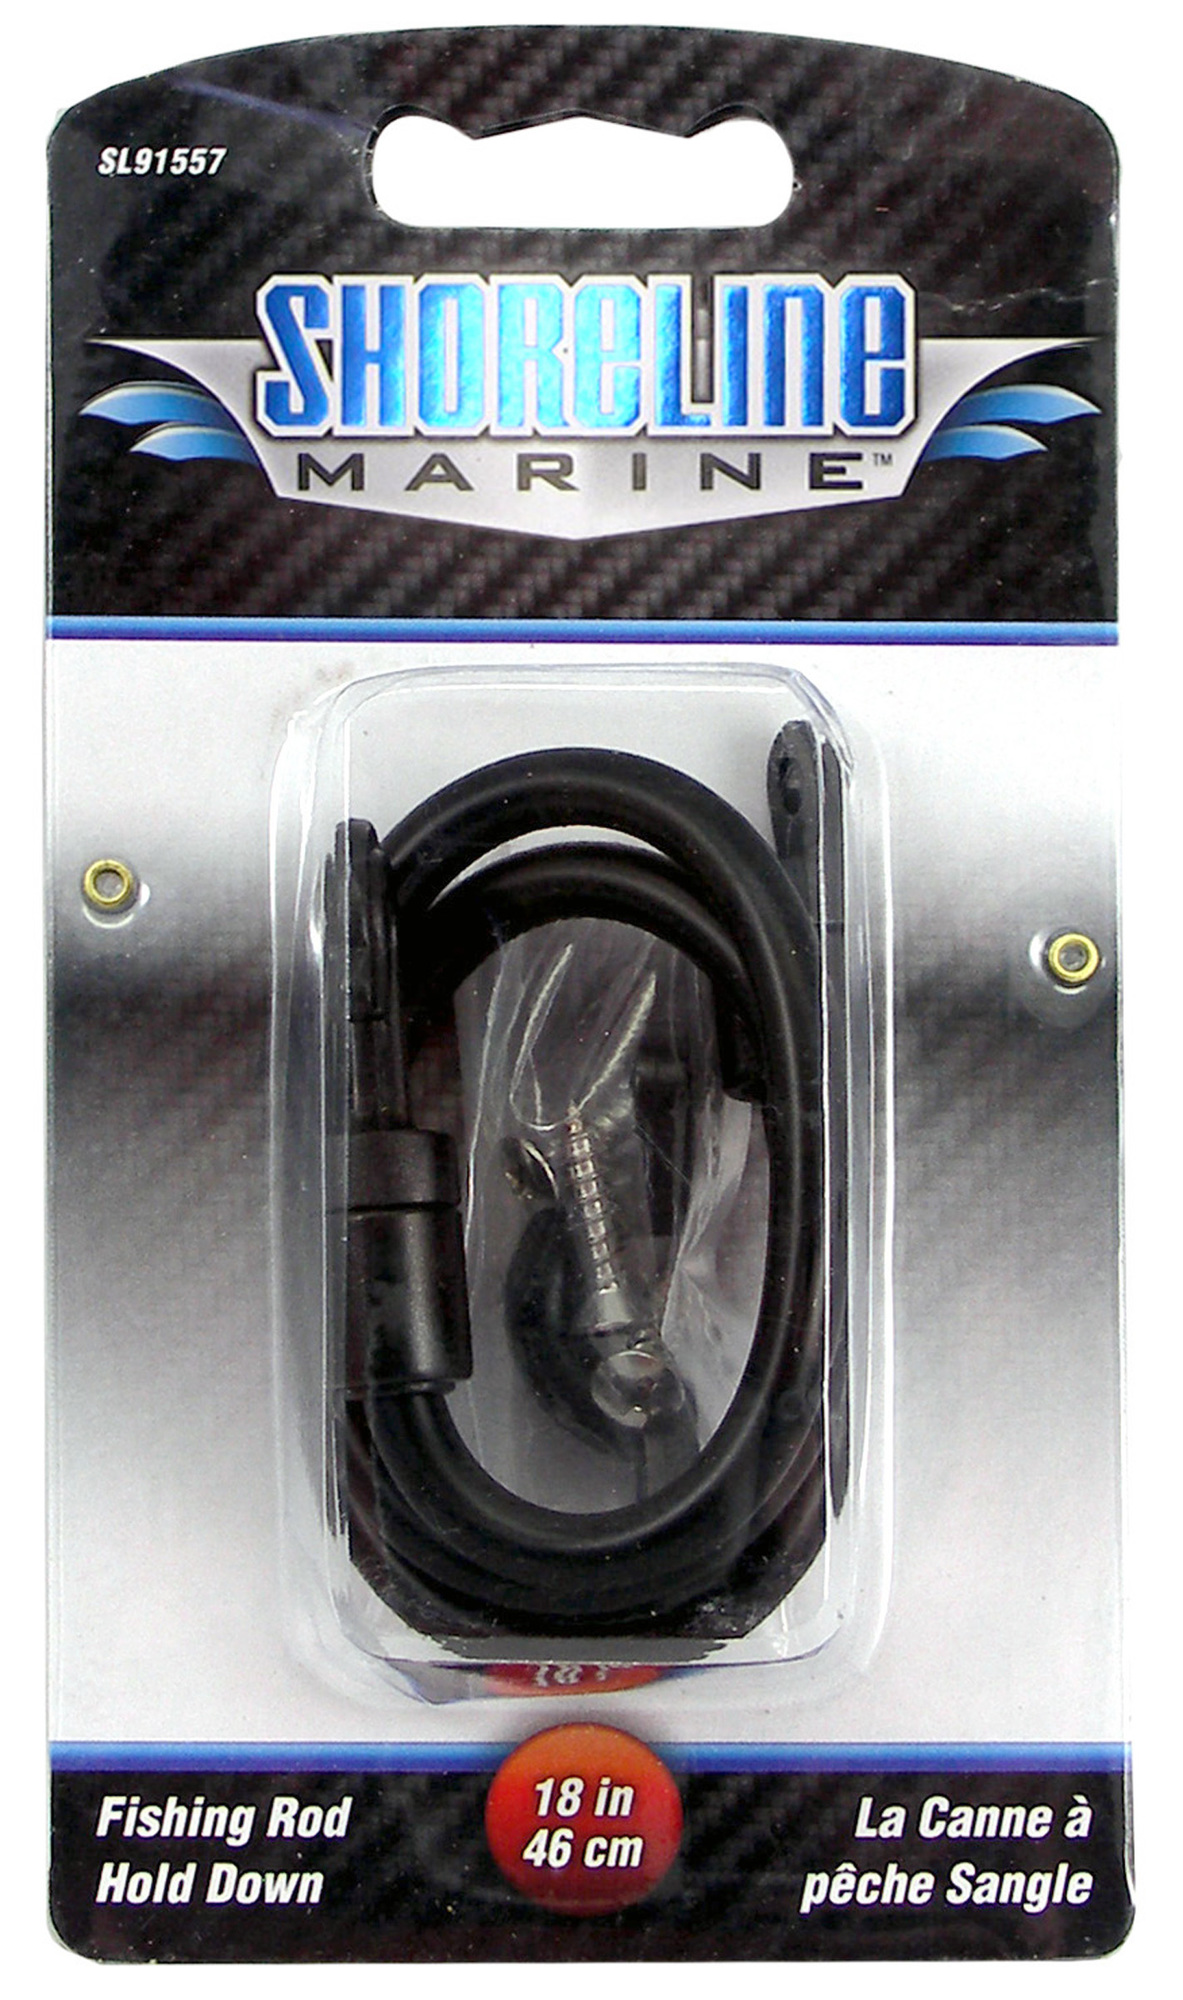 Shoreline Marine Rod Holder Deck Mount Kit